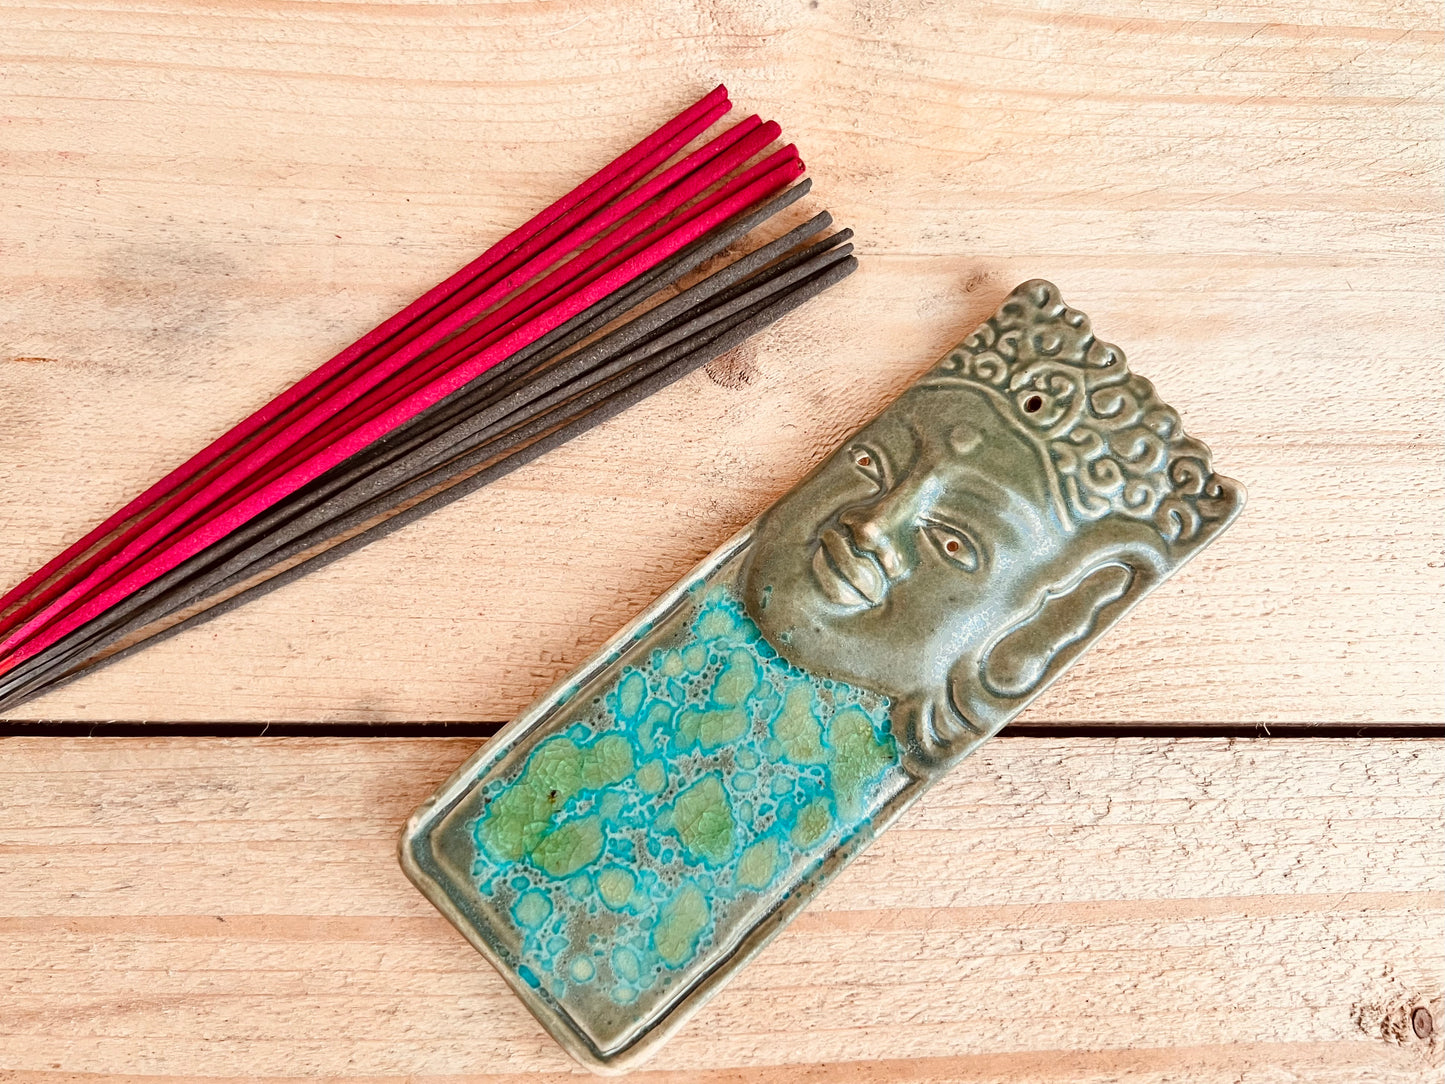 Green Ceramic Buddha design incense stick burner